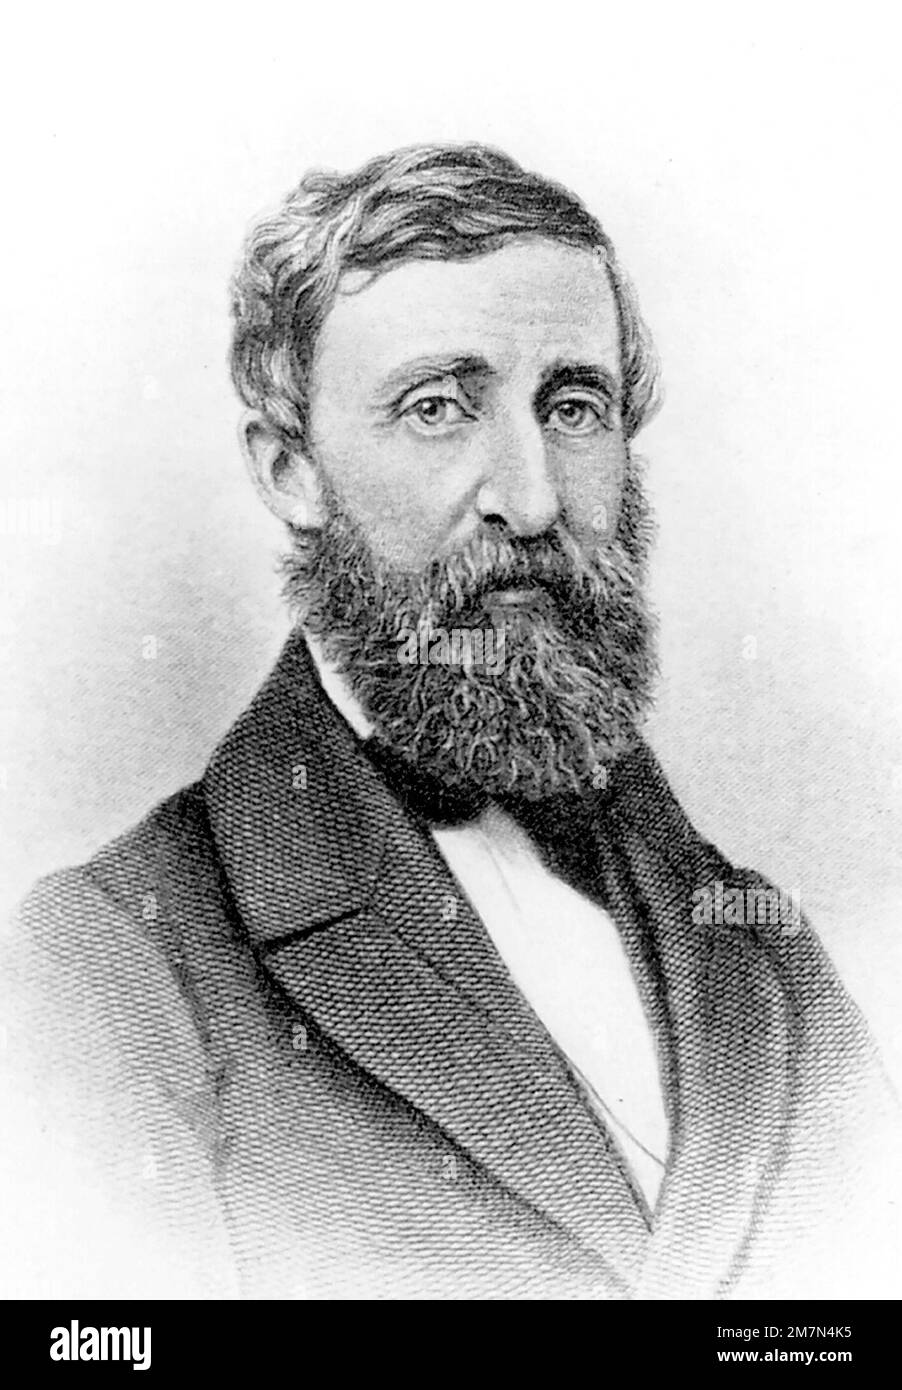 Henry David Thoreau. Portrait of the American poet and philosopher, Henry David Thoreau (1817-1862), photoengraving Stock Photo